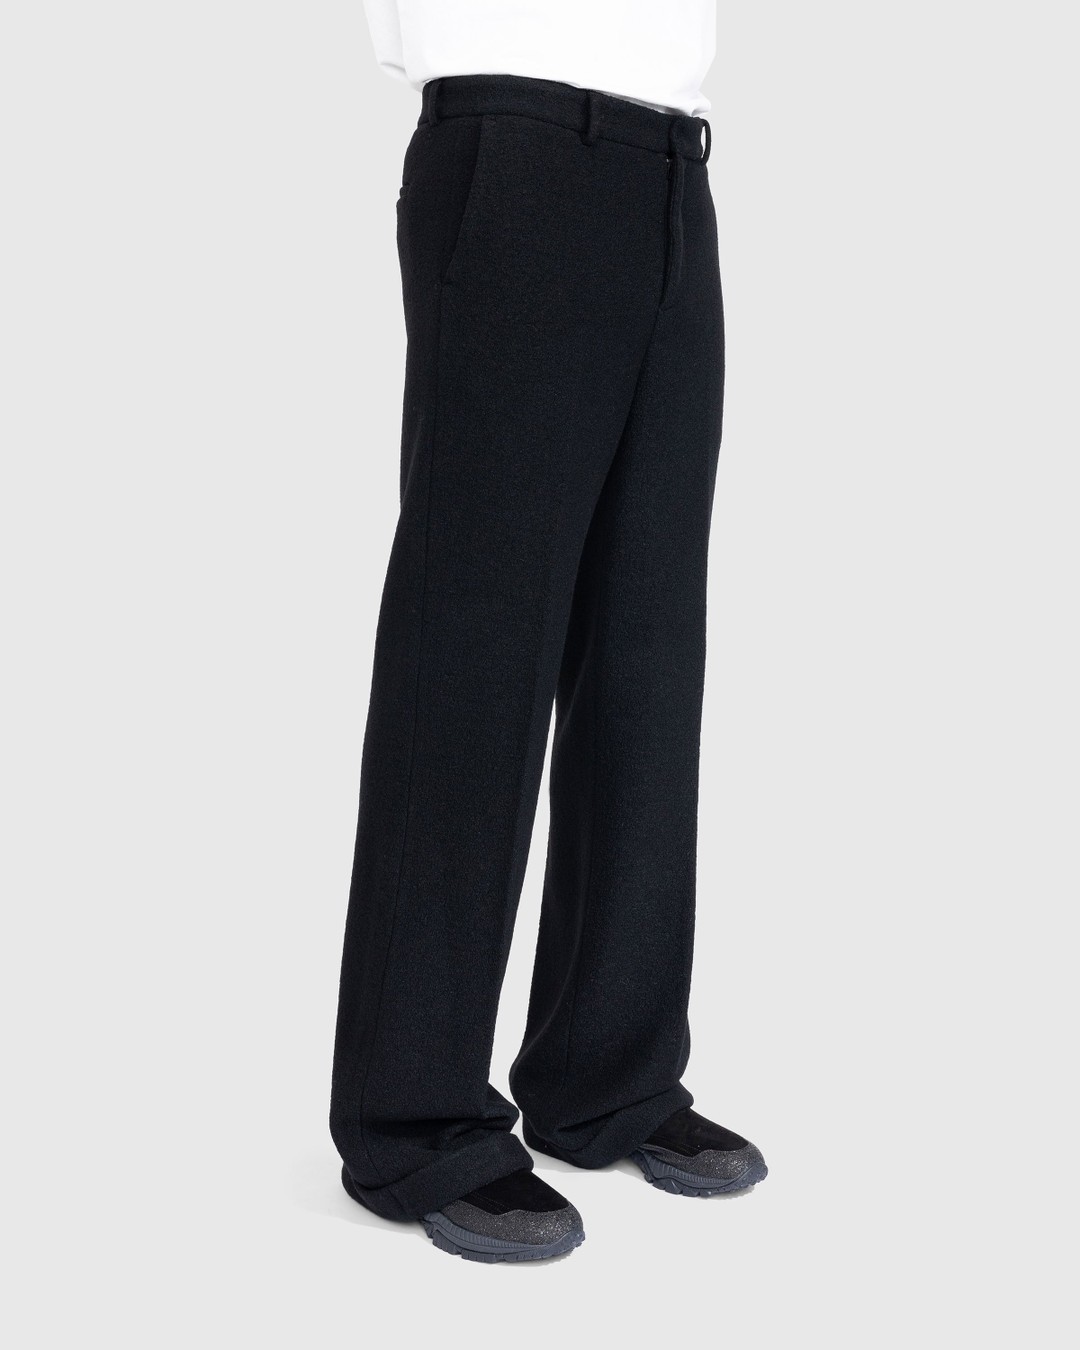 Trussardi – Boucle Jersey Trousers Black - Pants - Black - Image 3